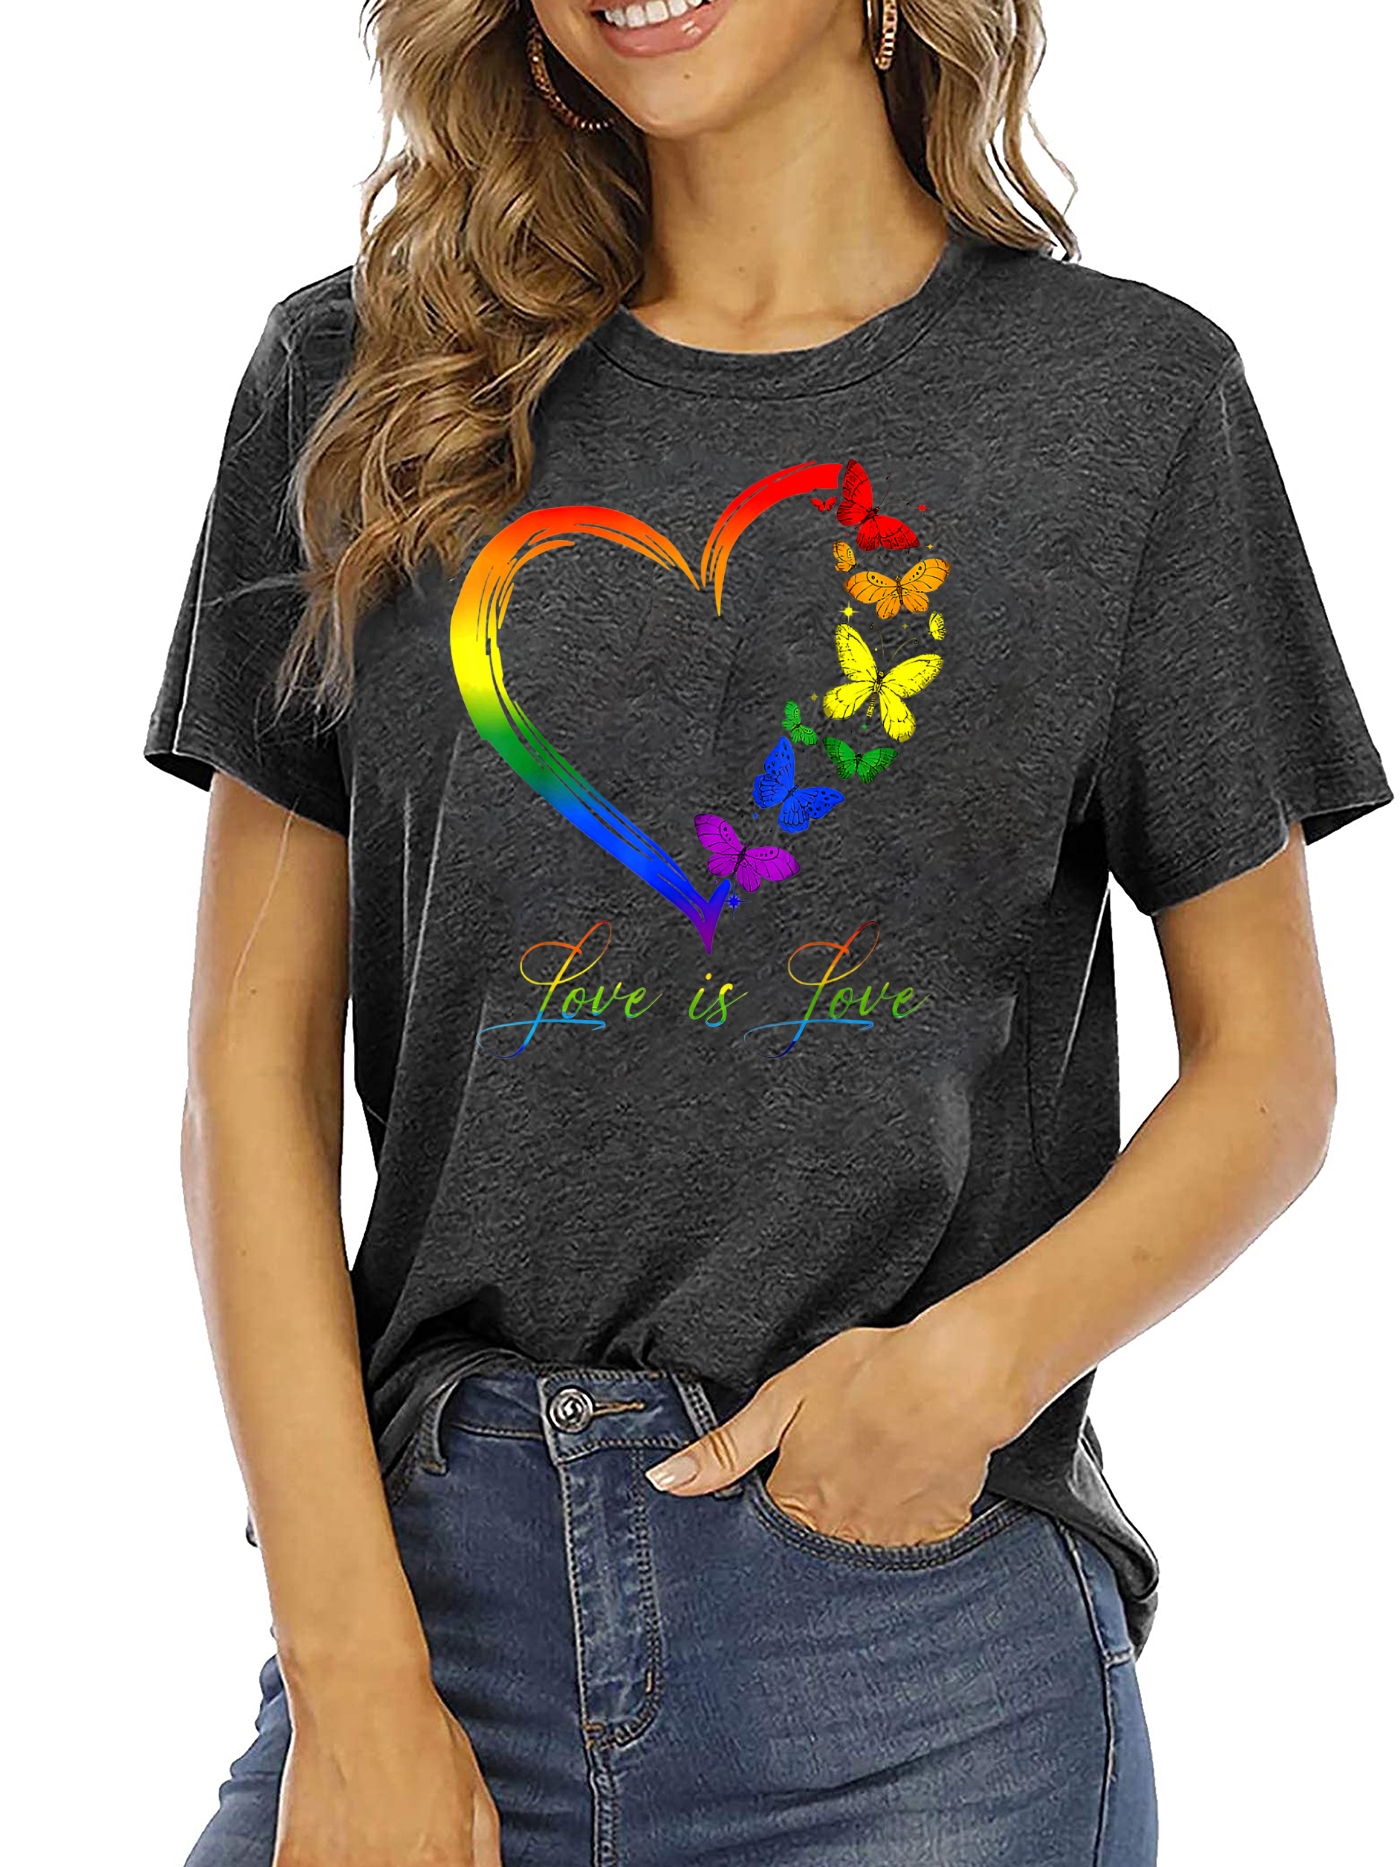 Buy Butterfly T-Shirt Womens Cute Heart Graphic Shirt Summer Crewneck Short- Sleeved Tee Top, Blue, X-Large at